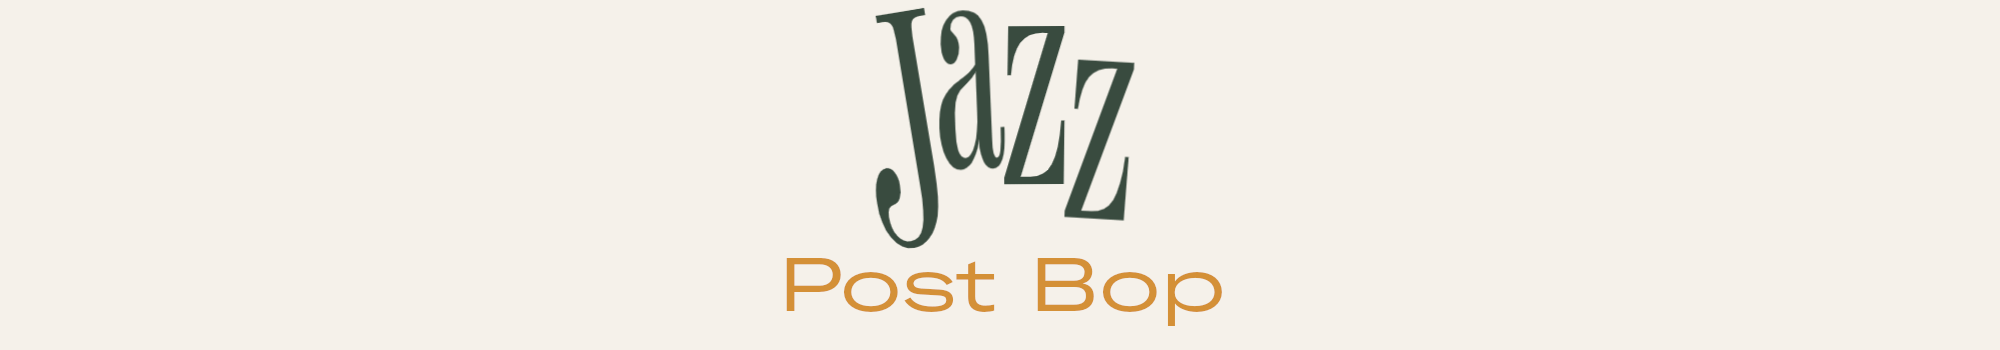 Rubrik till kategori: Jazz - Post Bop